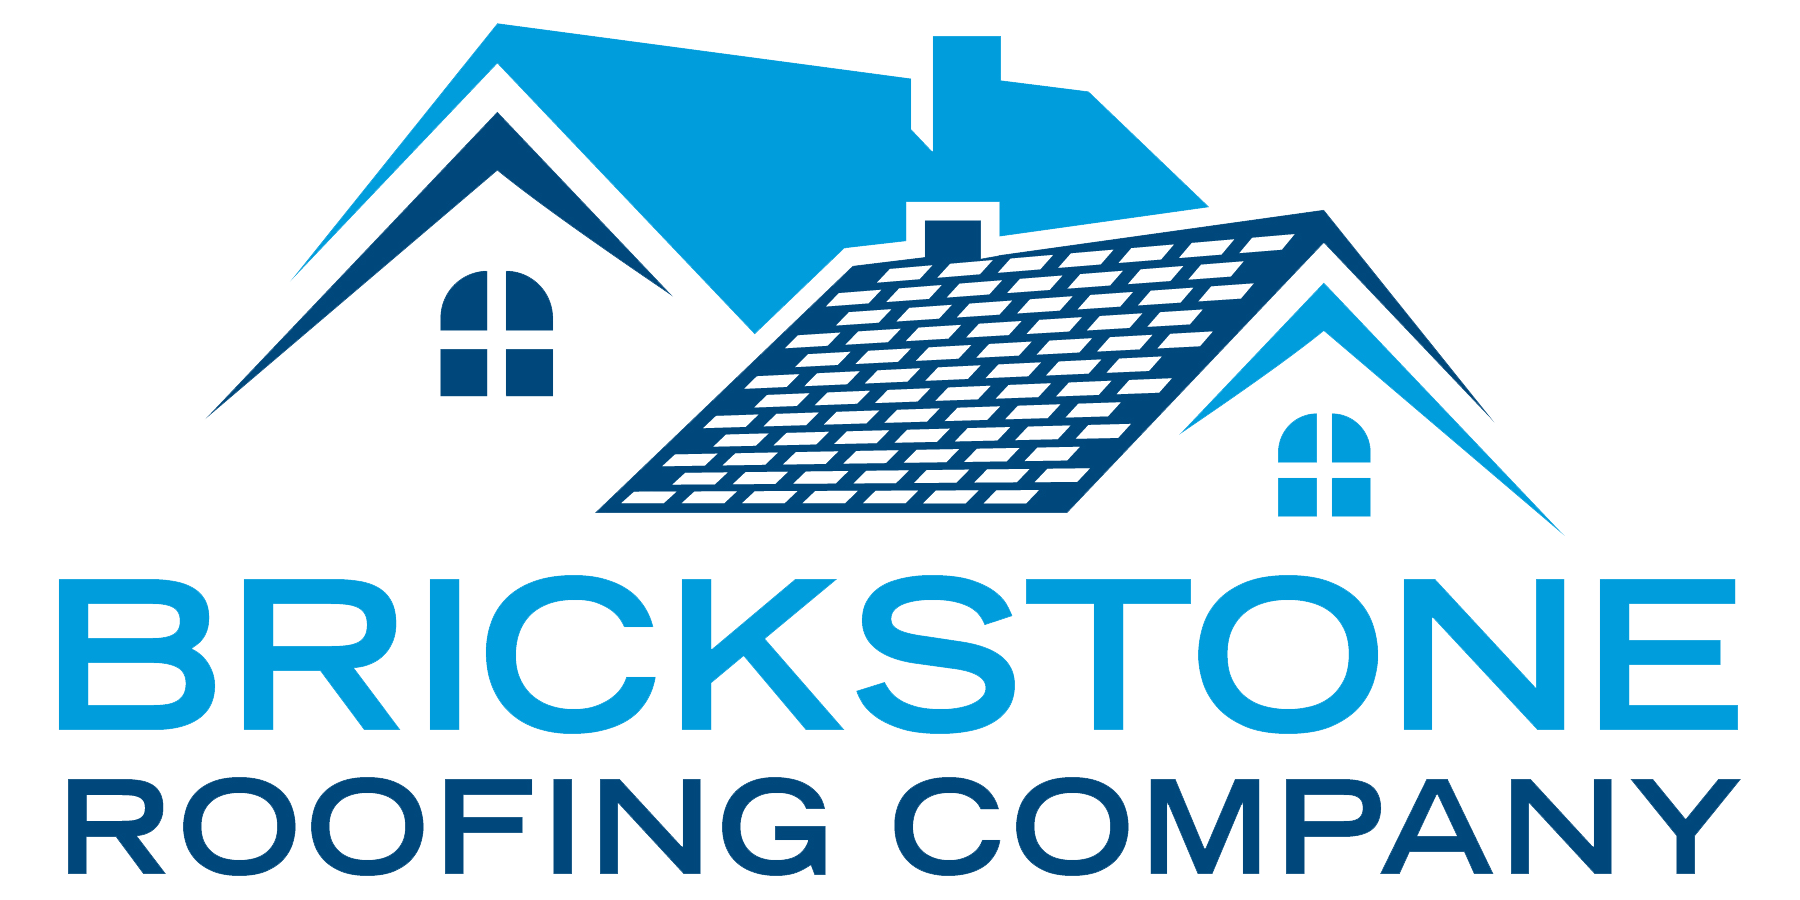 Brickstone Roofing Company